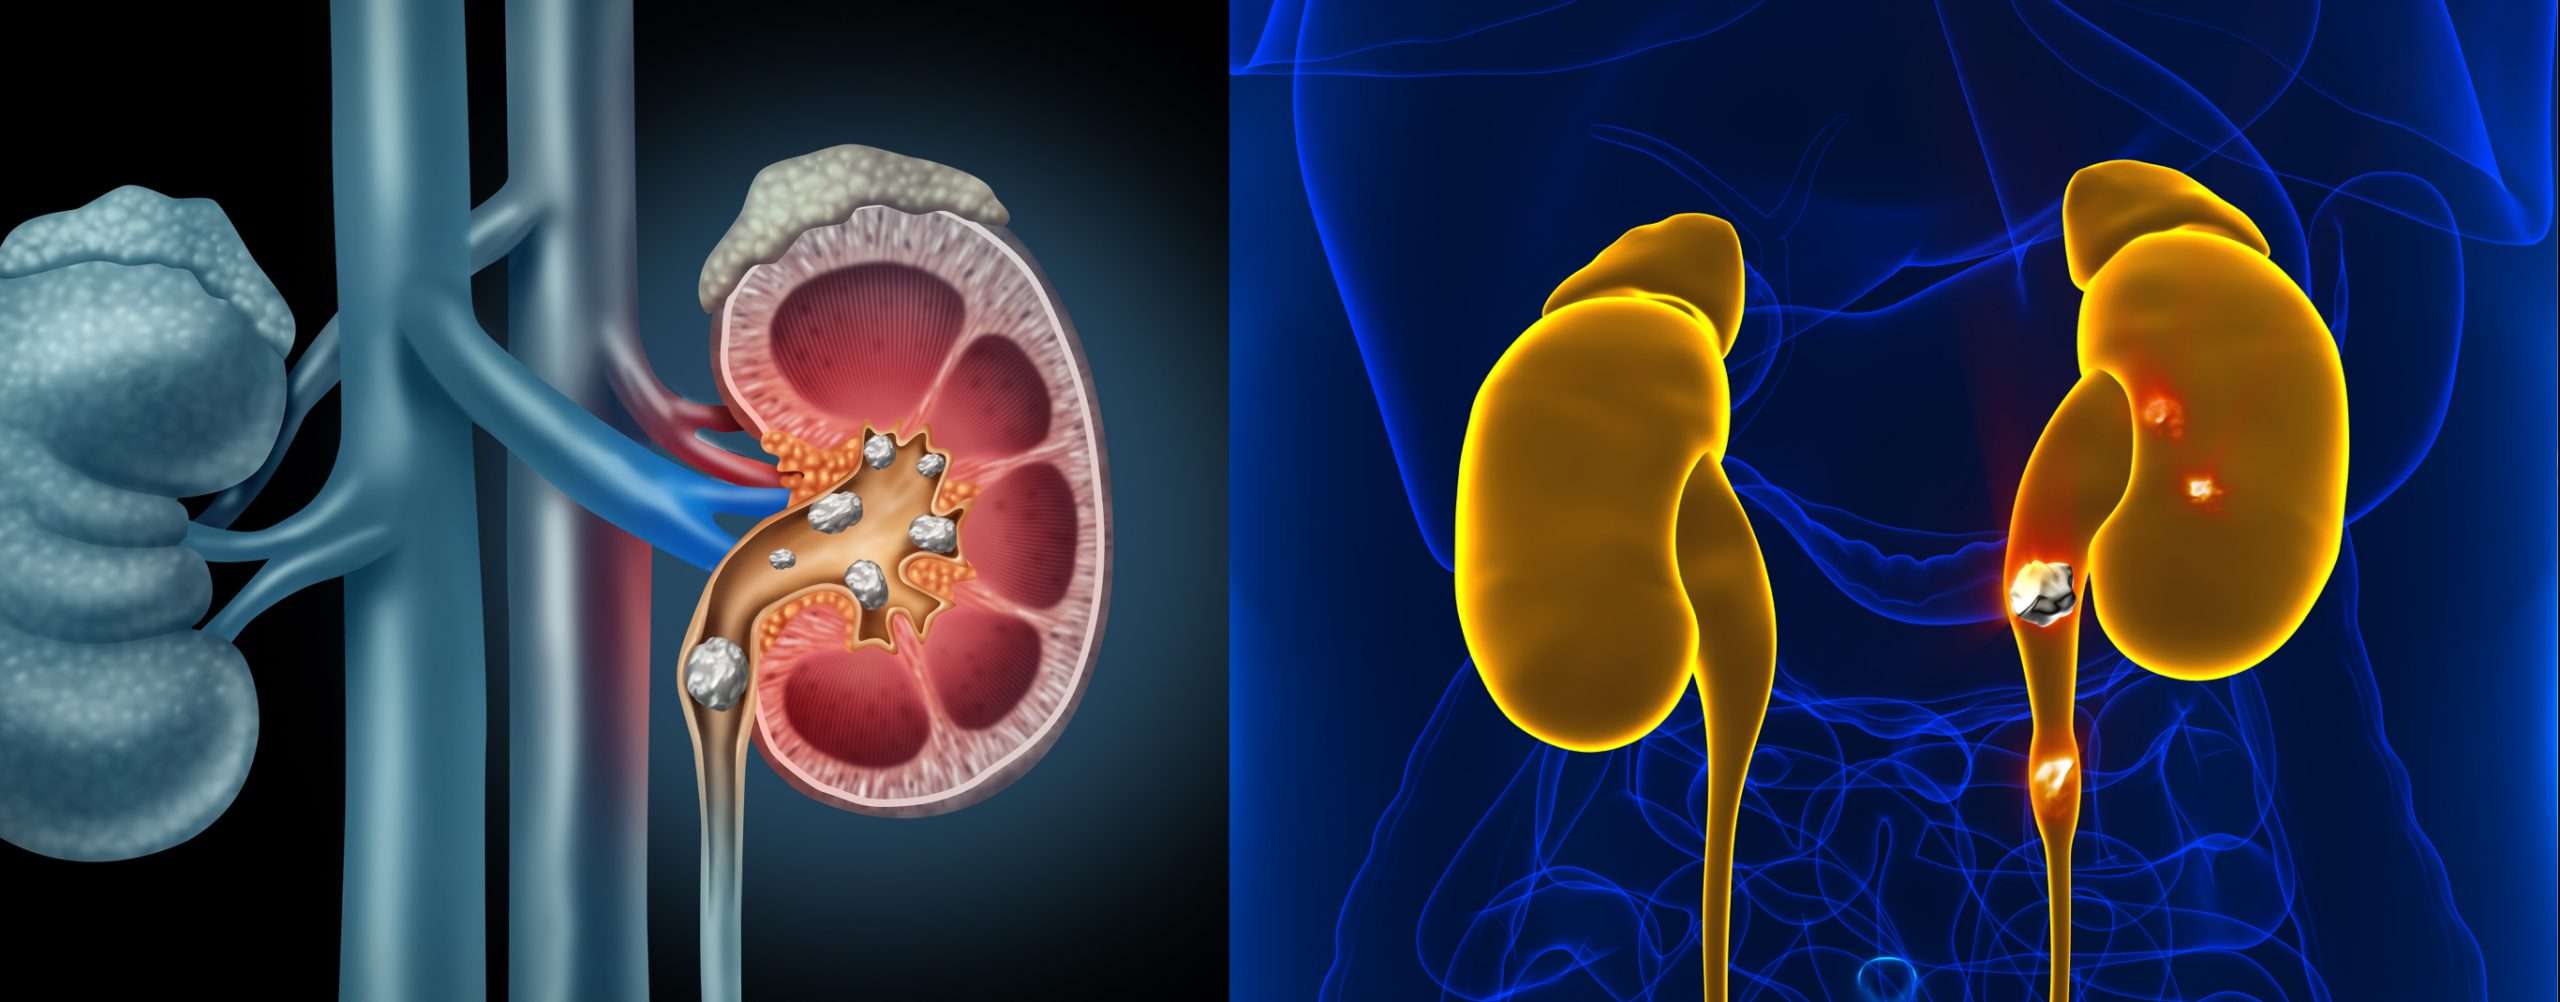 Understanding Kidney Stone